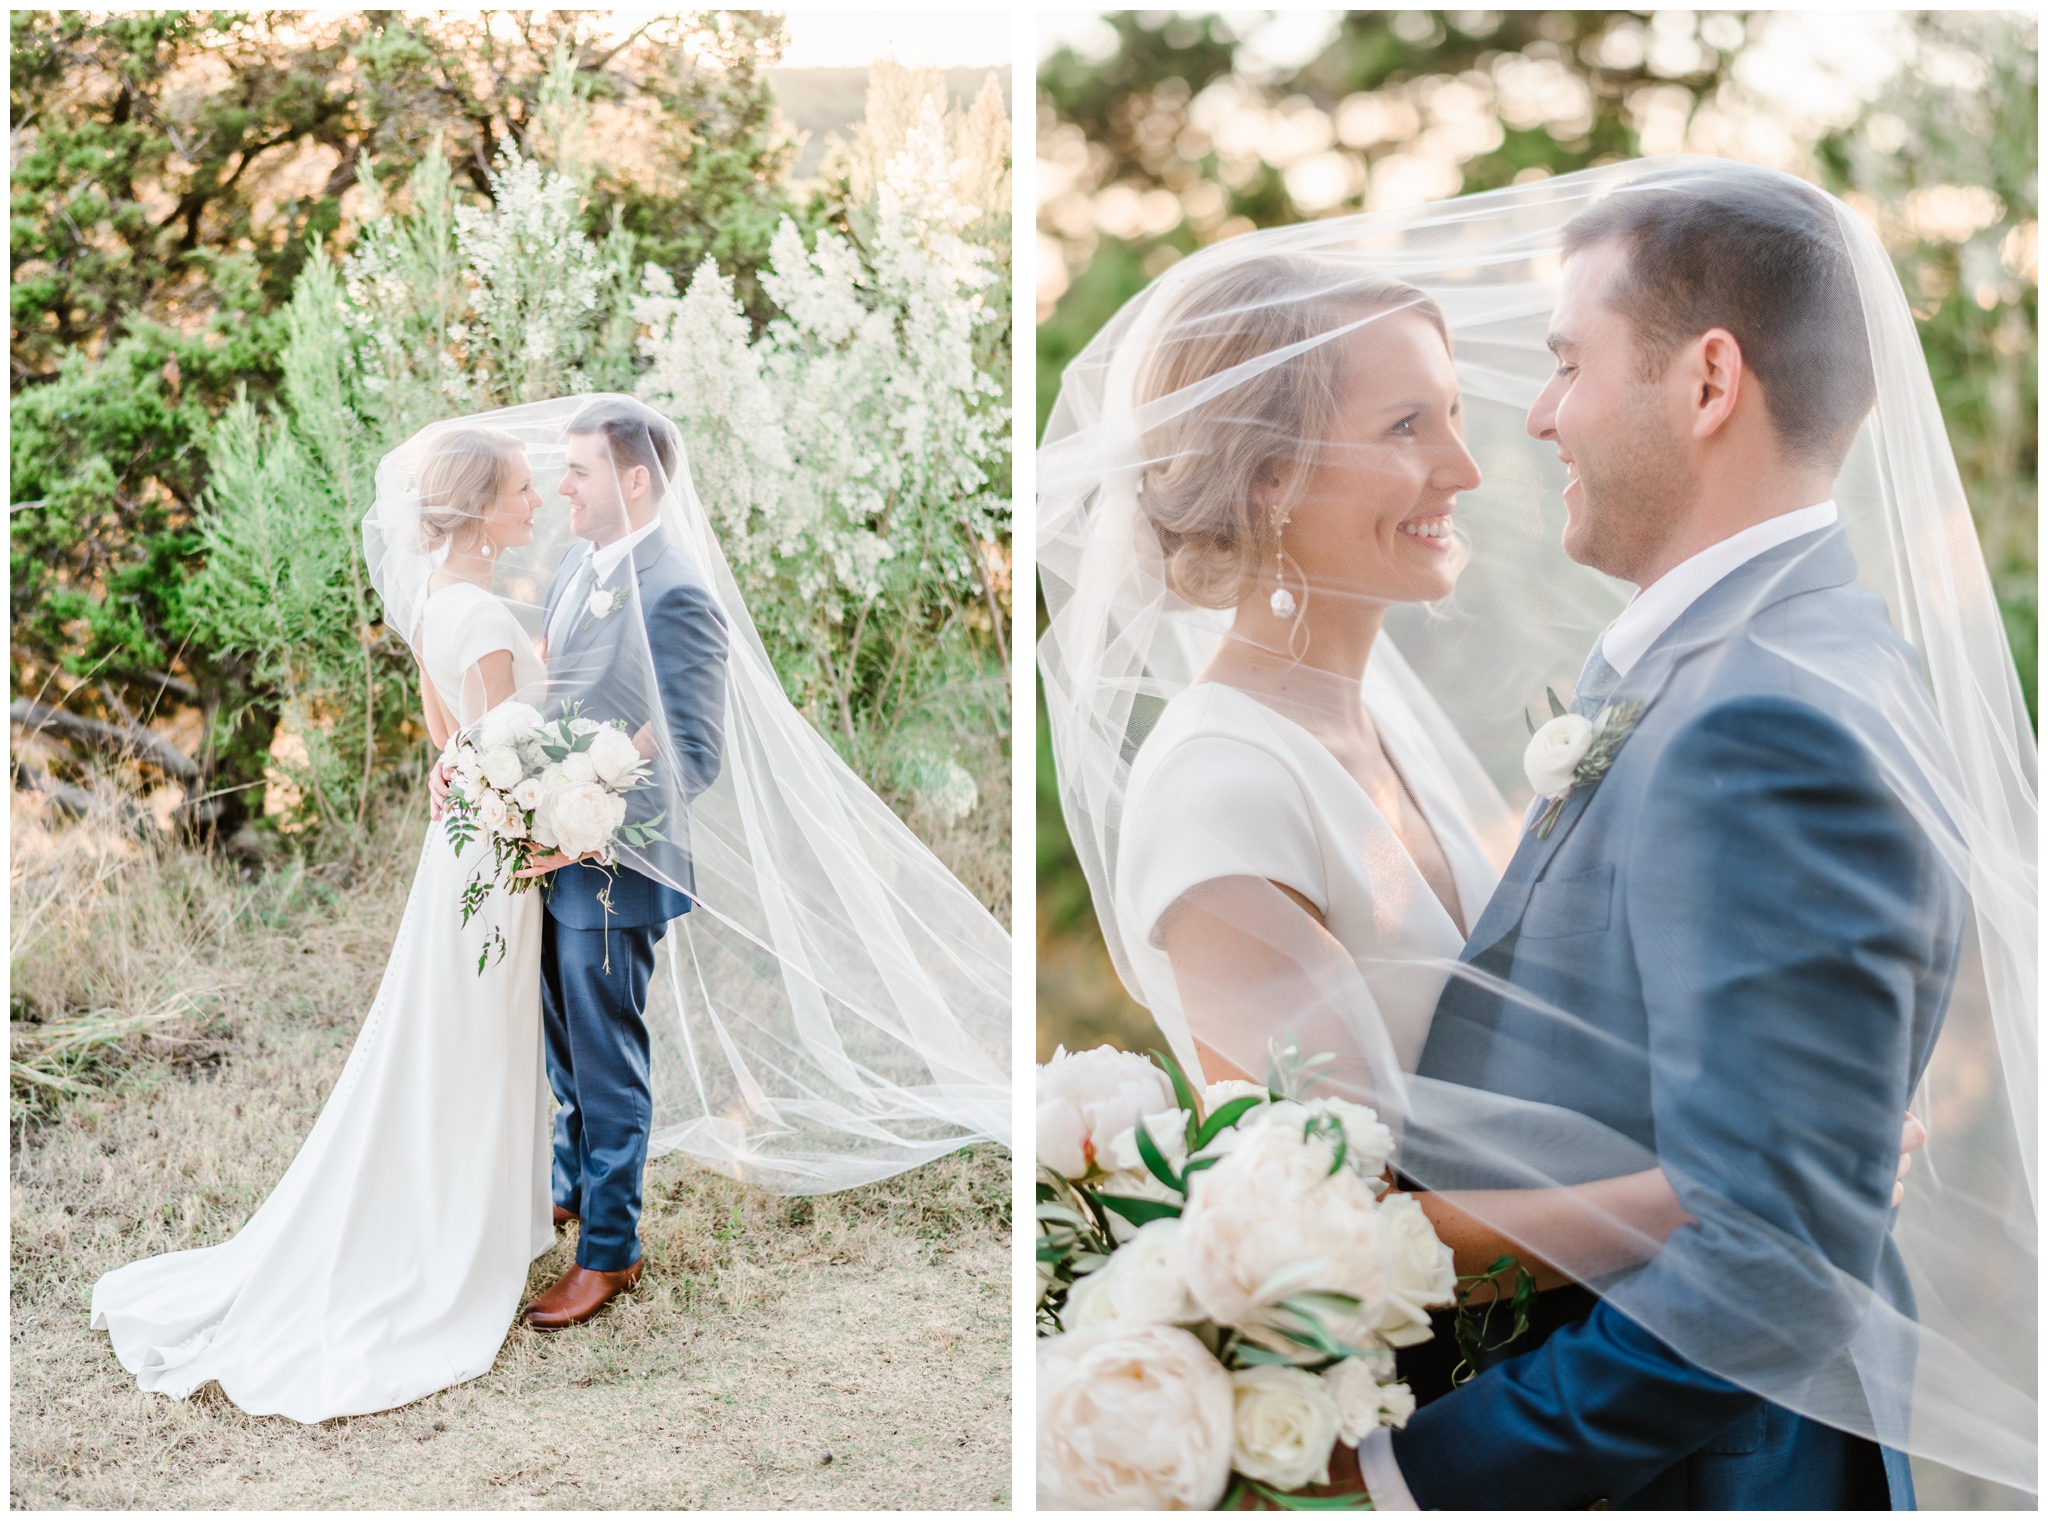 Fall wedding at Canyonwood Ridge in Austin, Texas | Joslyn Holtfort Photography